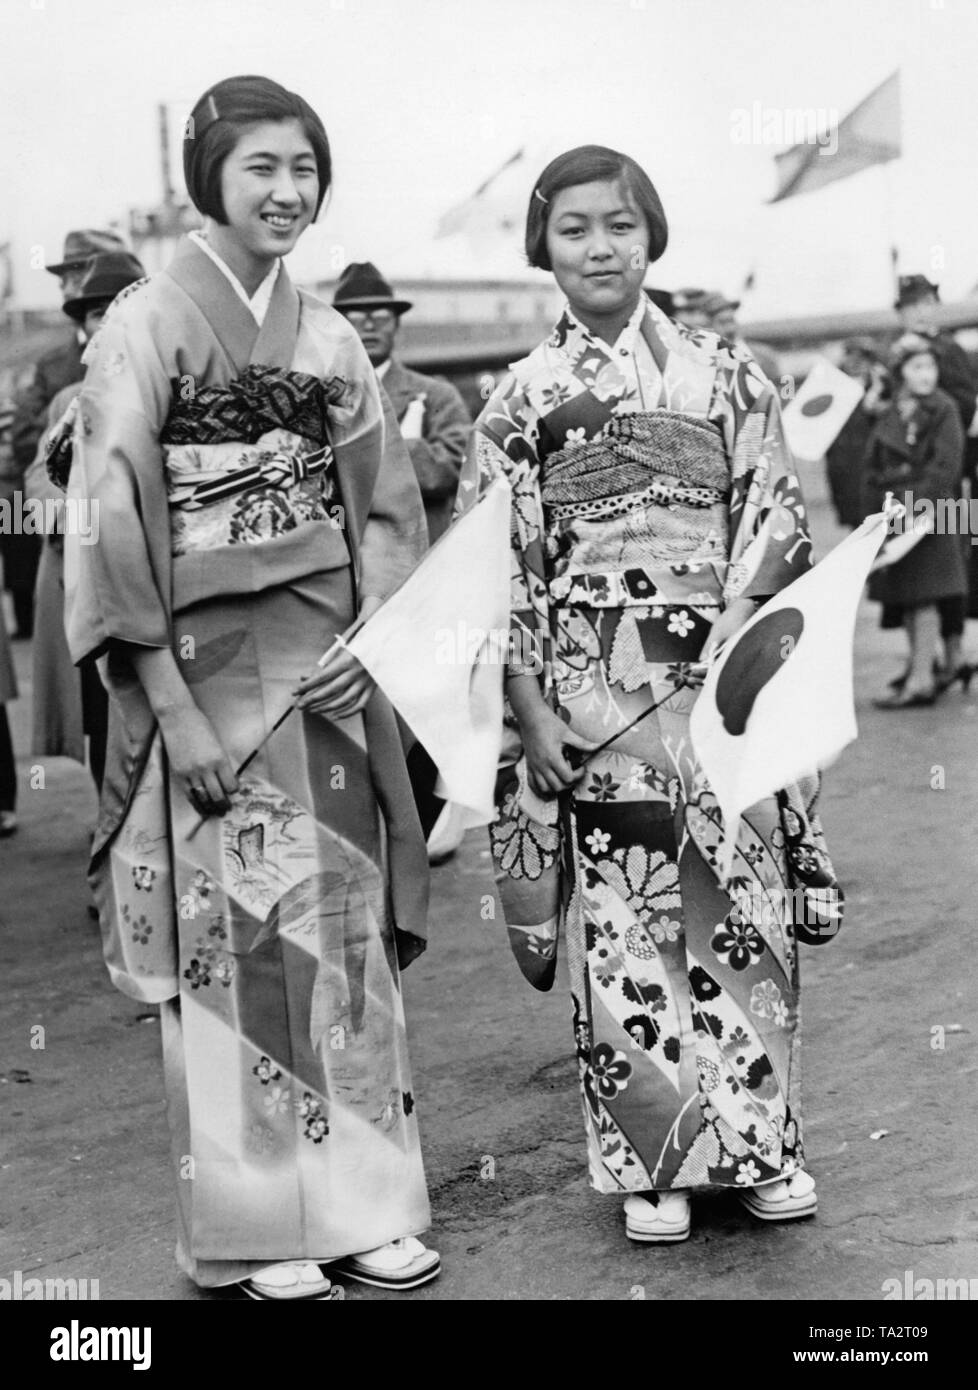 Japanese kimono Black and White Stock Photos & Images - Alamy